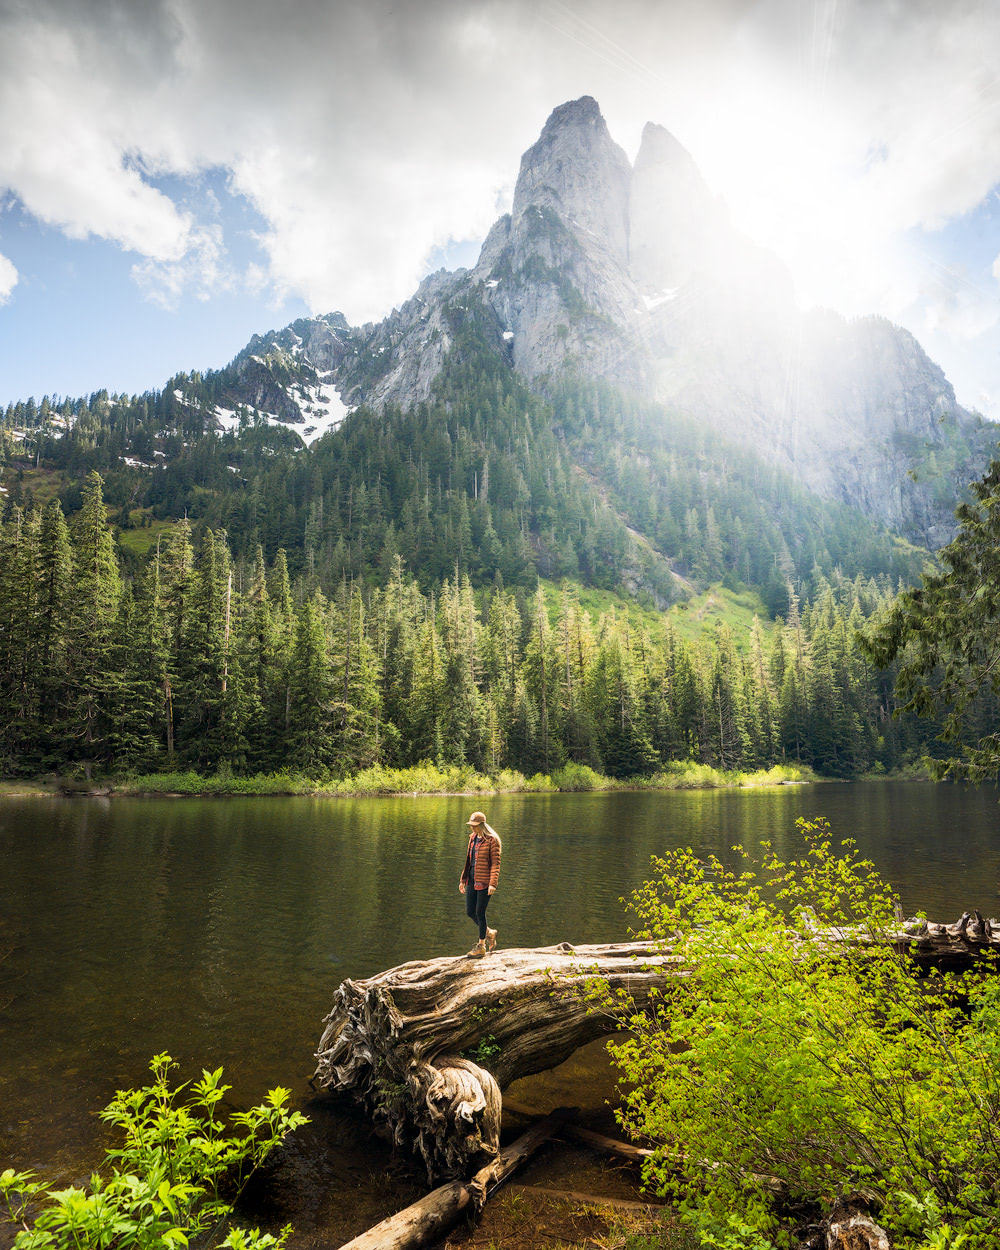 Beginner Friendly Hikes in Washington State - Barclay Lake